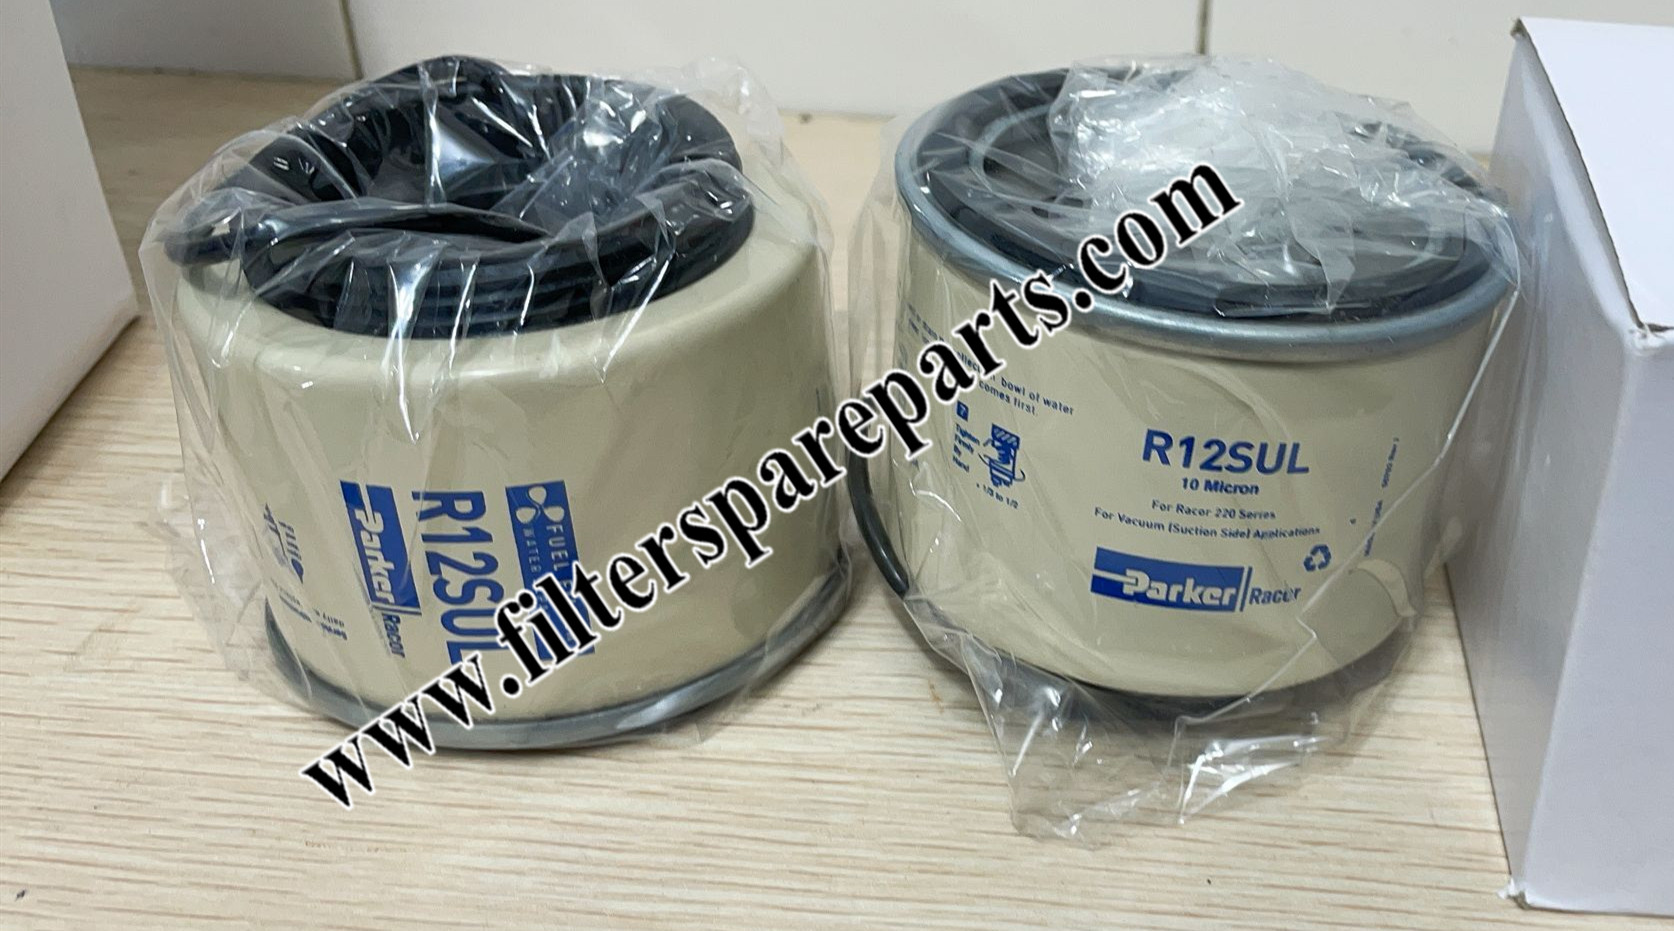 R12SUL PARKER/ Racor Fuel Filter